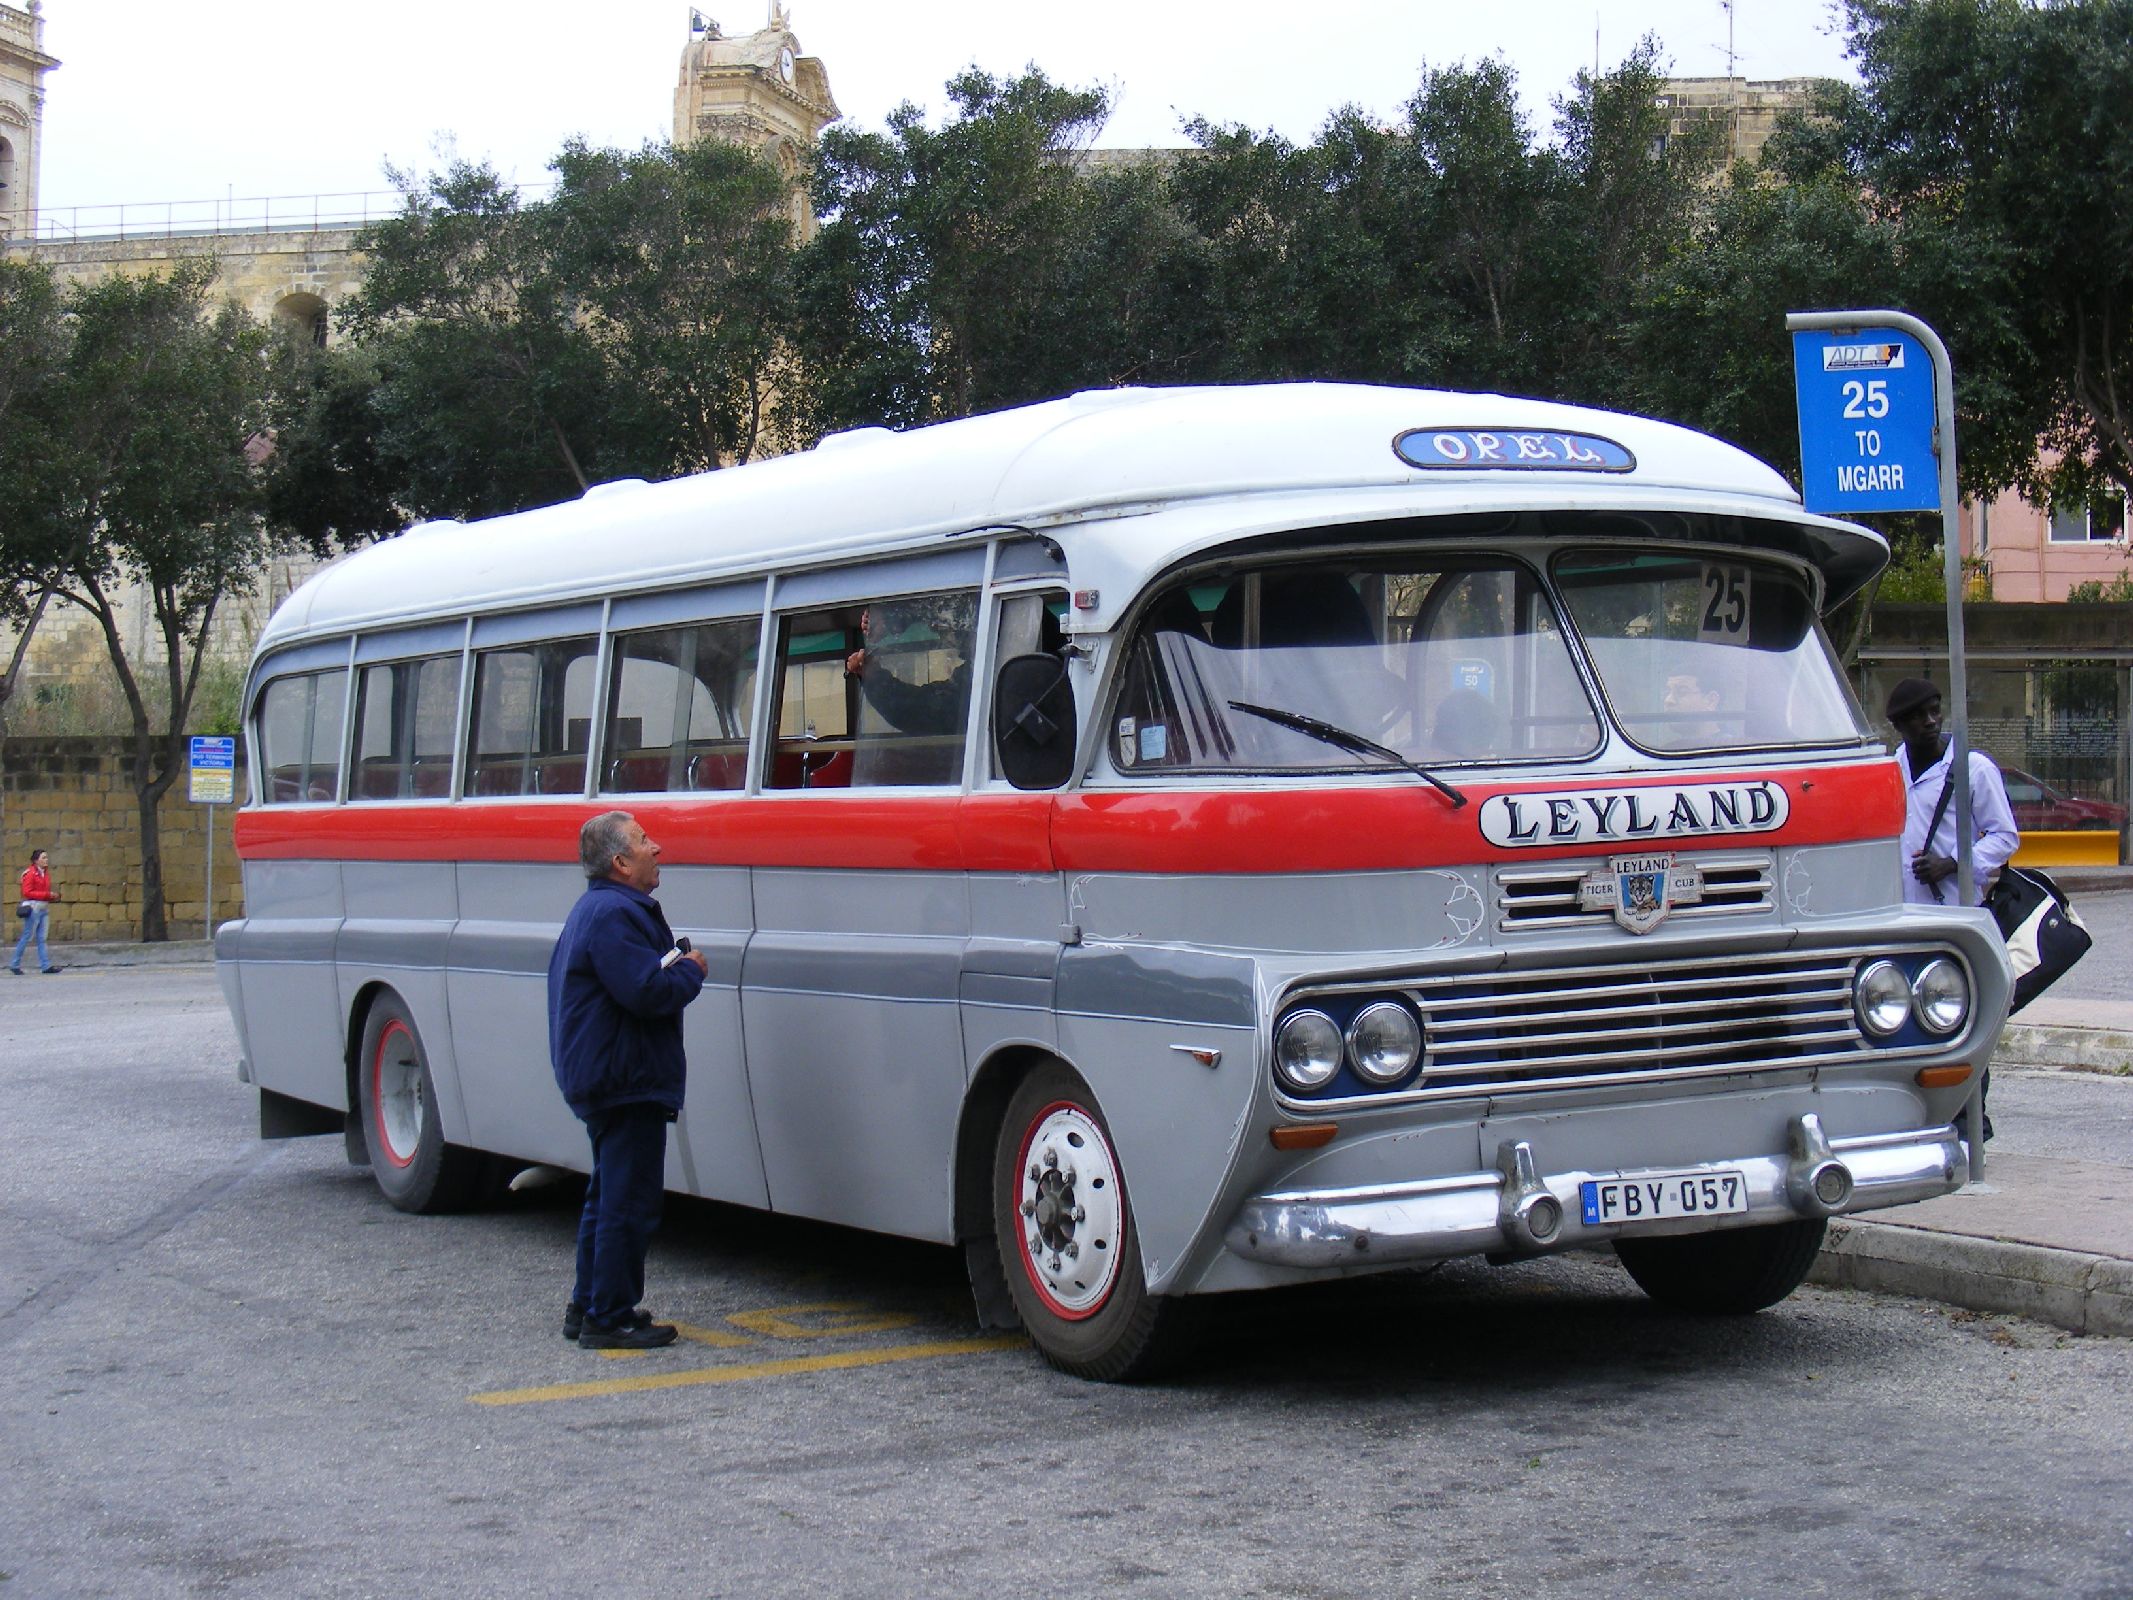 Dossier : FBY057 Leyland bus, Victoria - Rabat, Gozo. - Flickr...